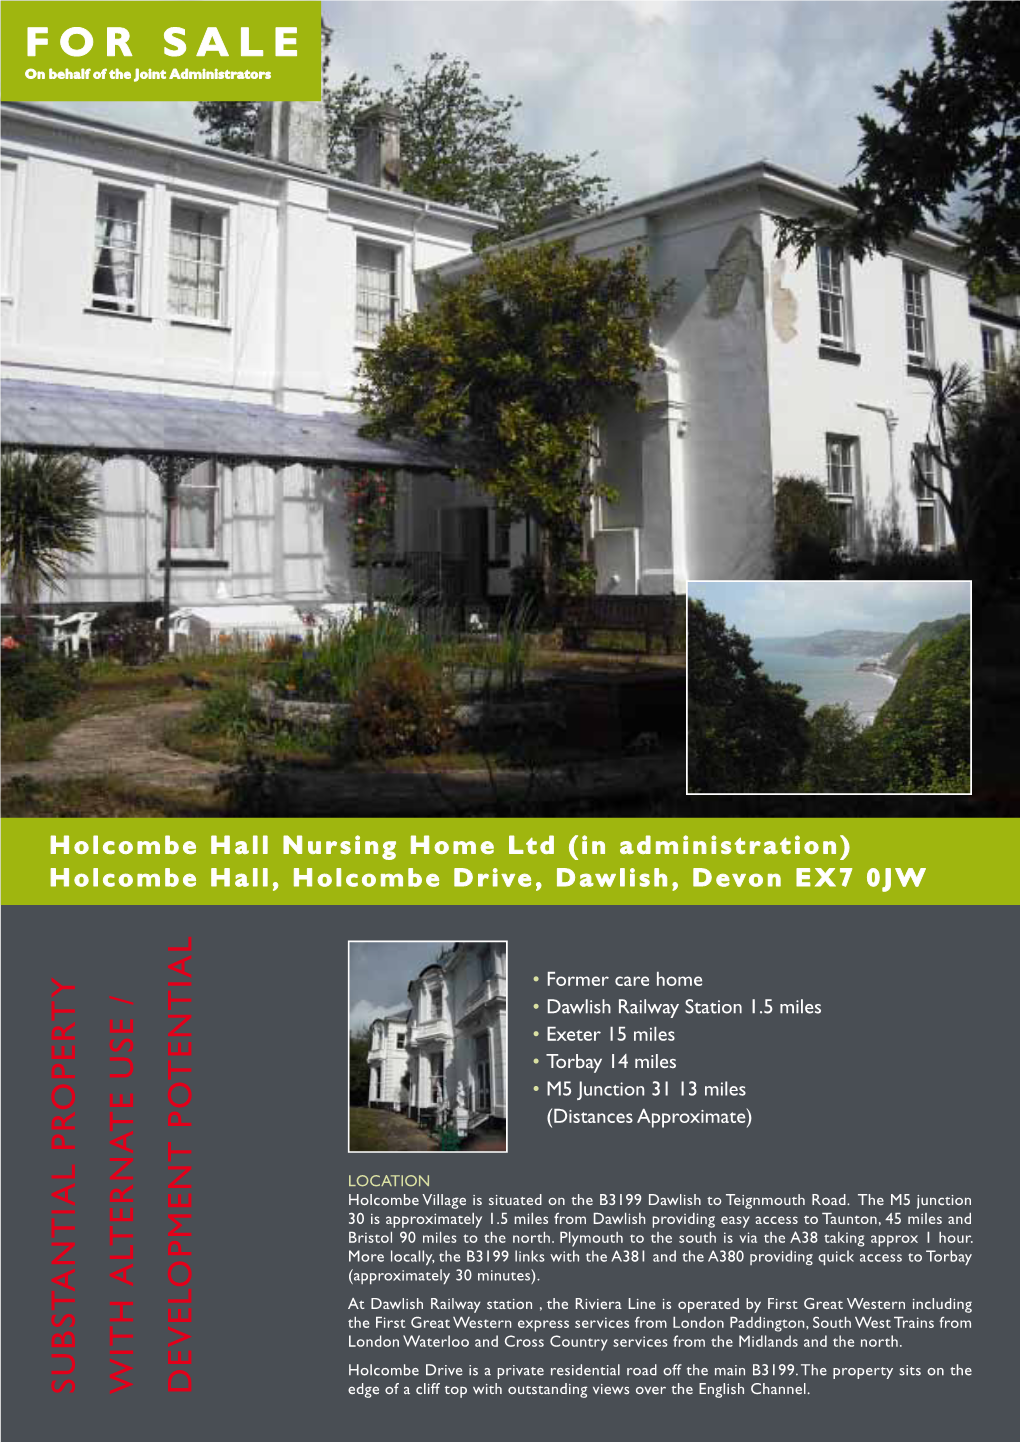 Holcombe Hall, Holcombe Drive, Dawlish, Devon EX7 0JW for SALE